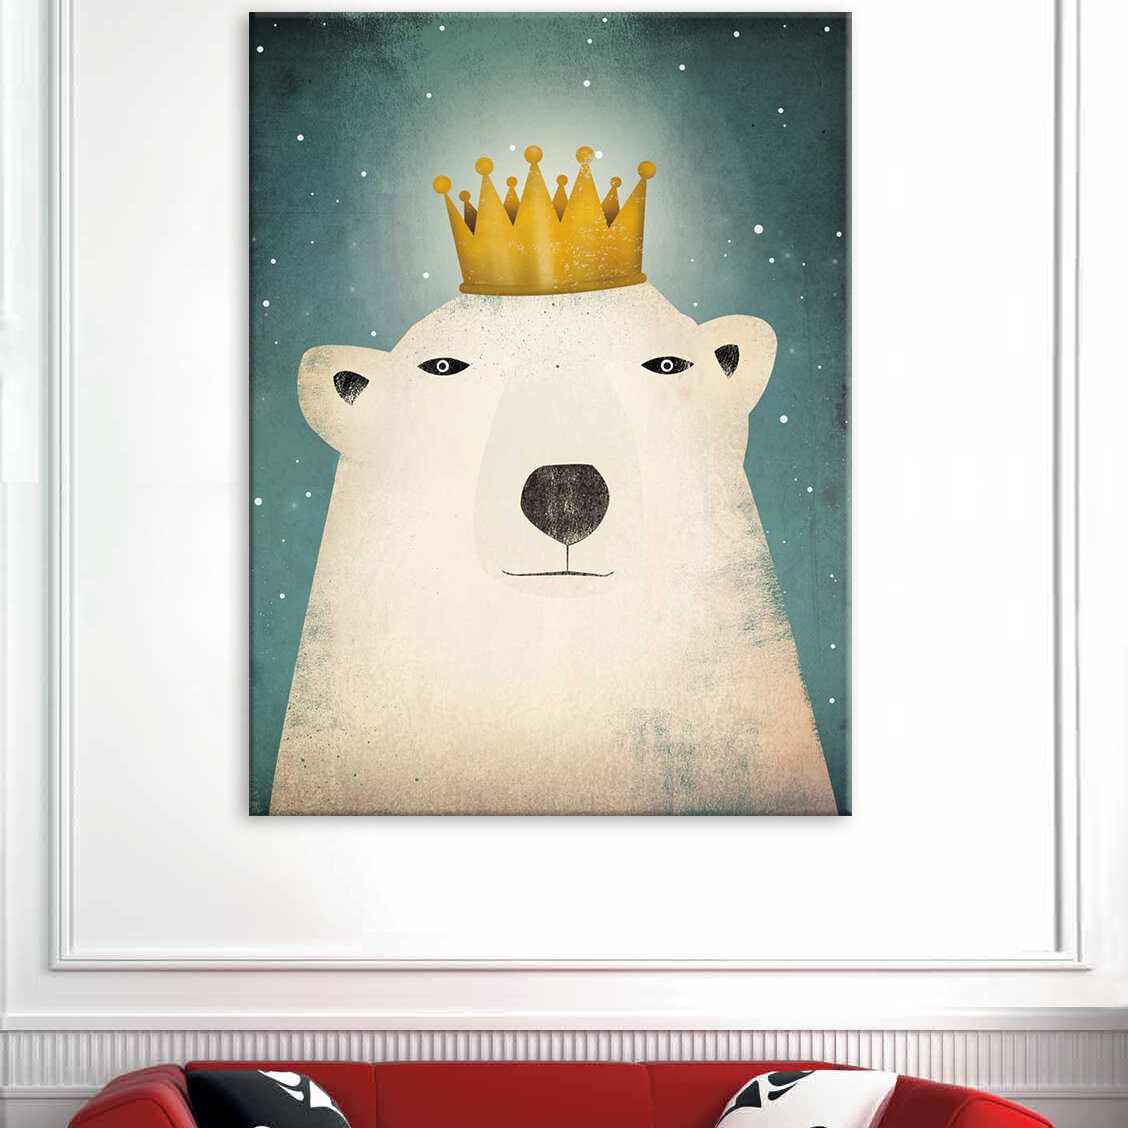 Clicart Polar King On Canvas by Ryan Fowler Print